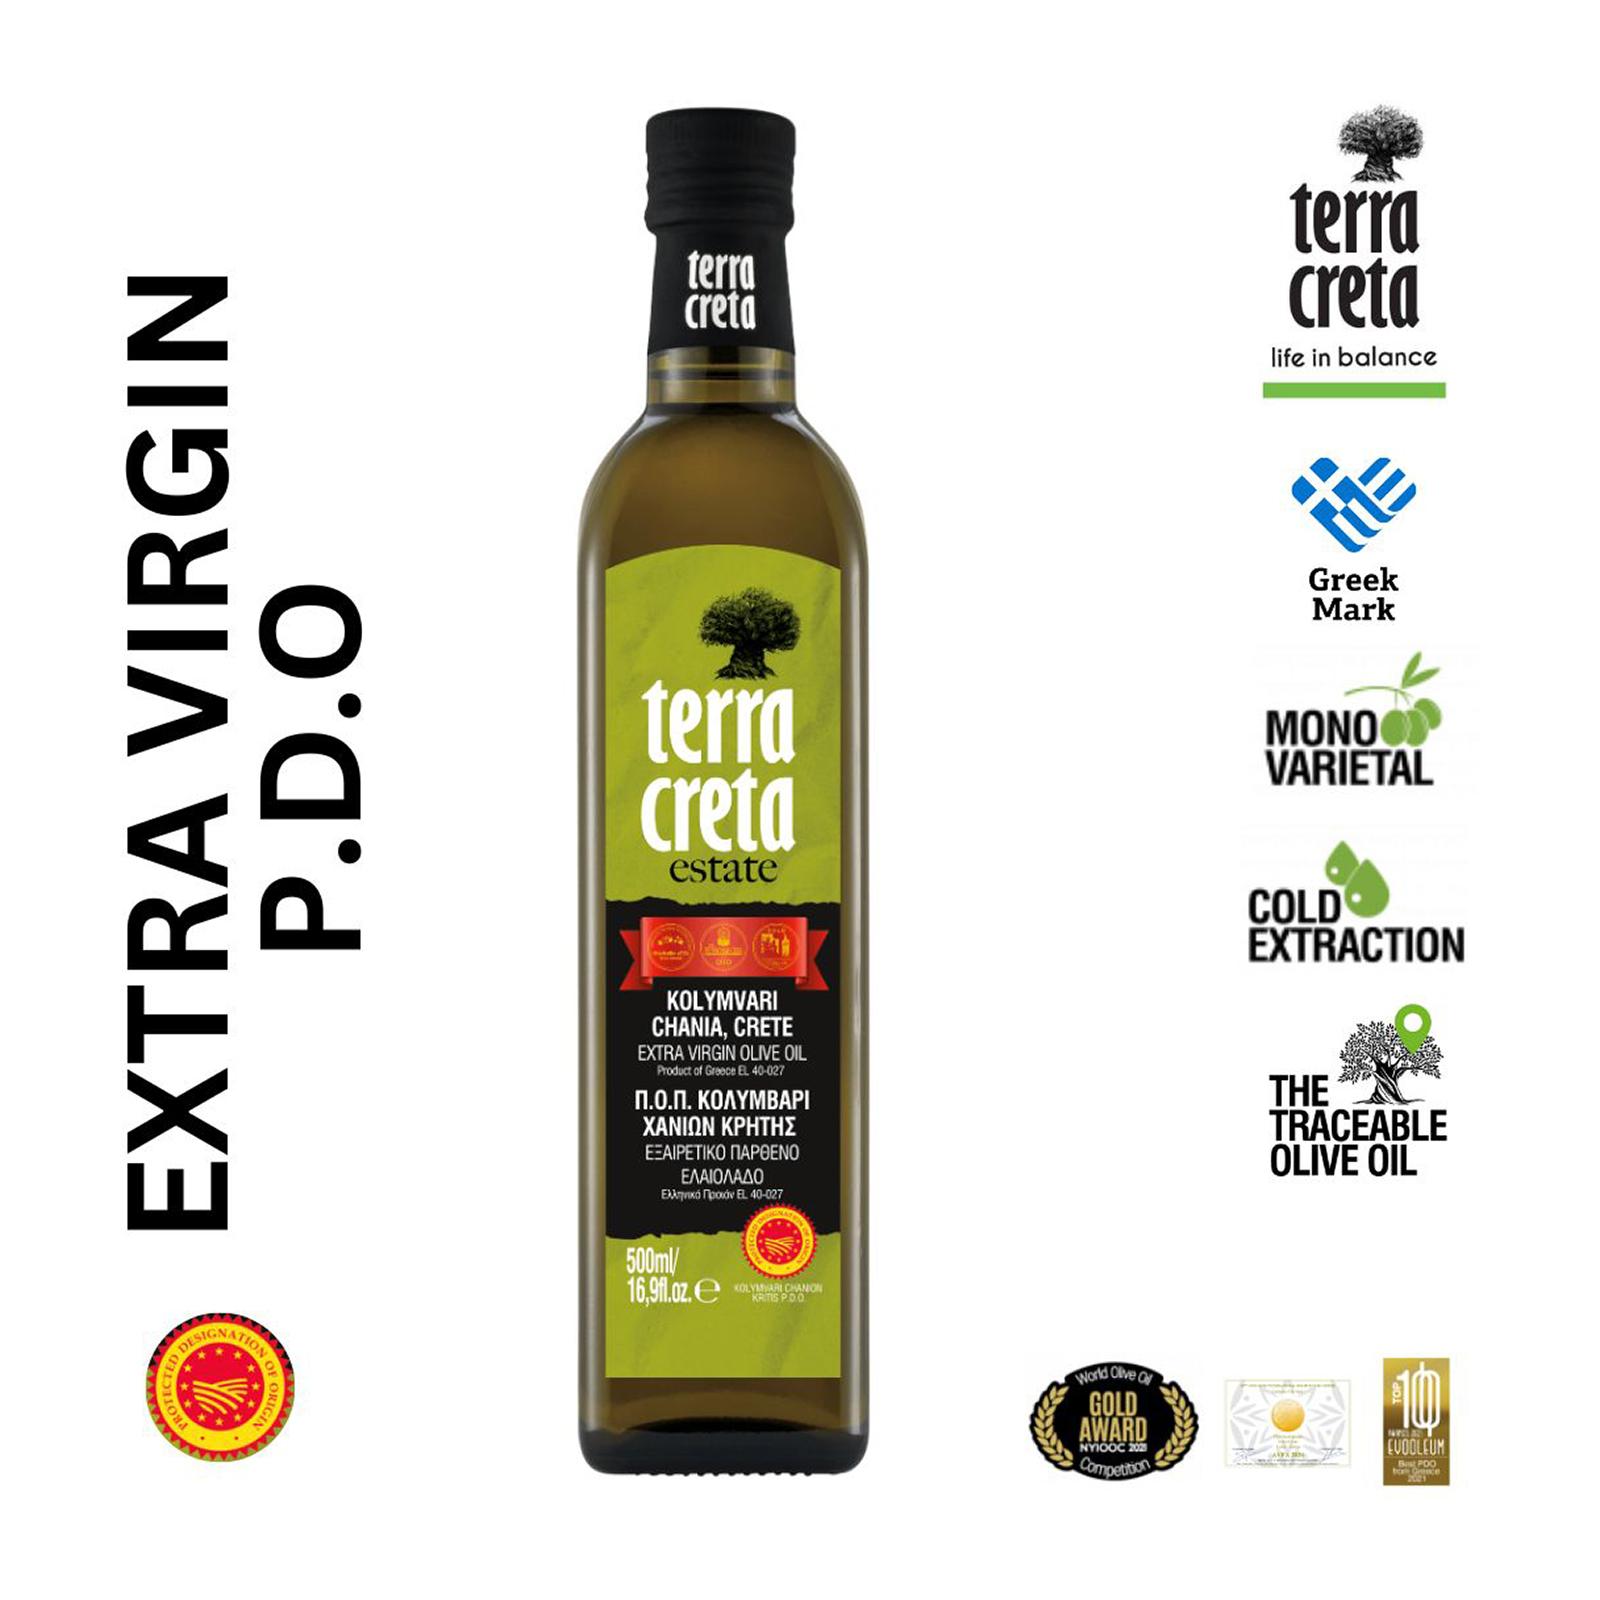 Terra Creta Estate PDO Kolymvari Greek Extra Virgin Olive Oil In A